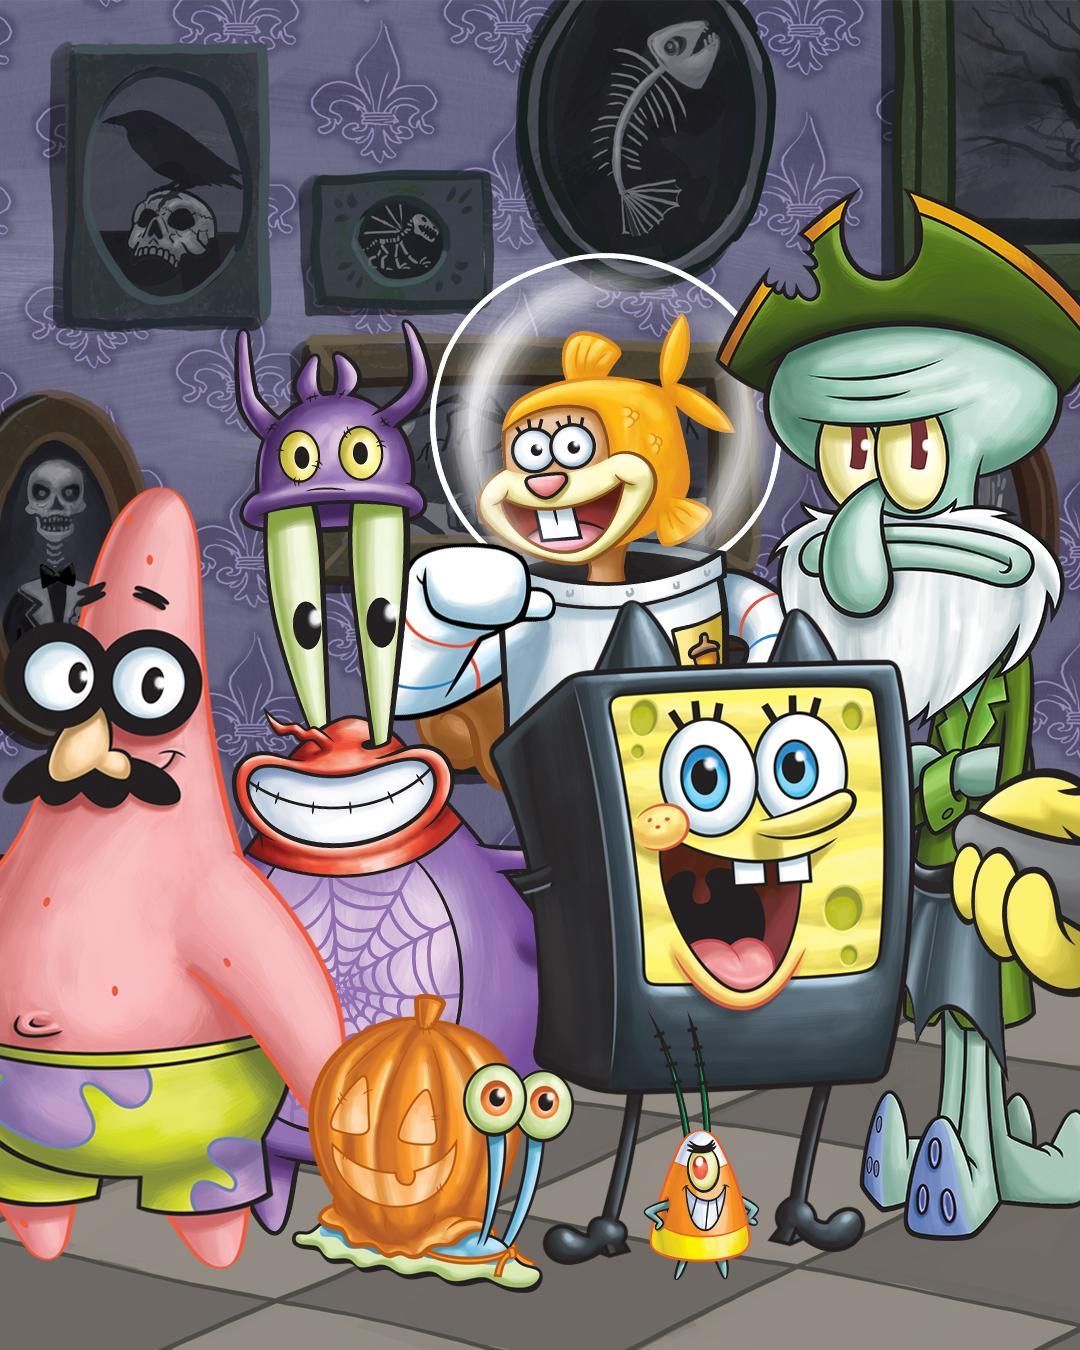 Spongebob & friends halloween. Spongebob drawings, Spongebob wallpaper, Spongebob halloween